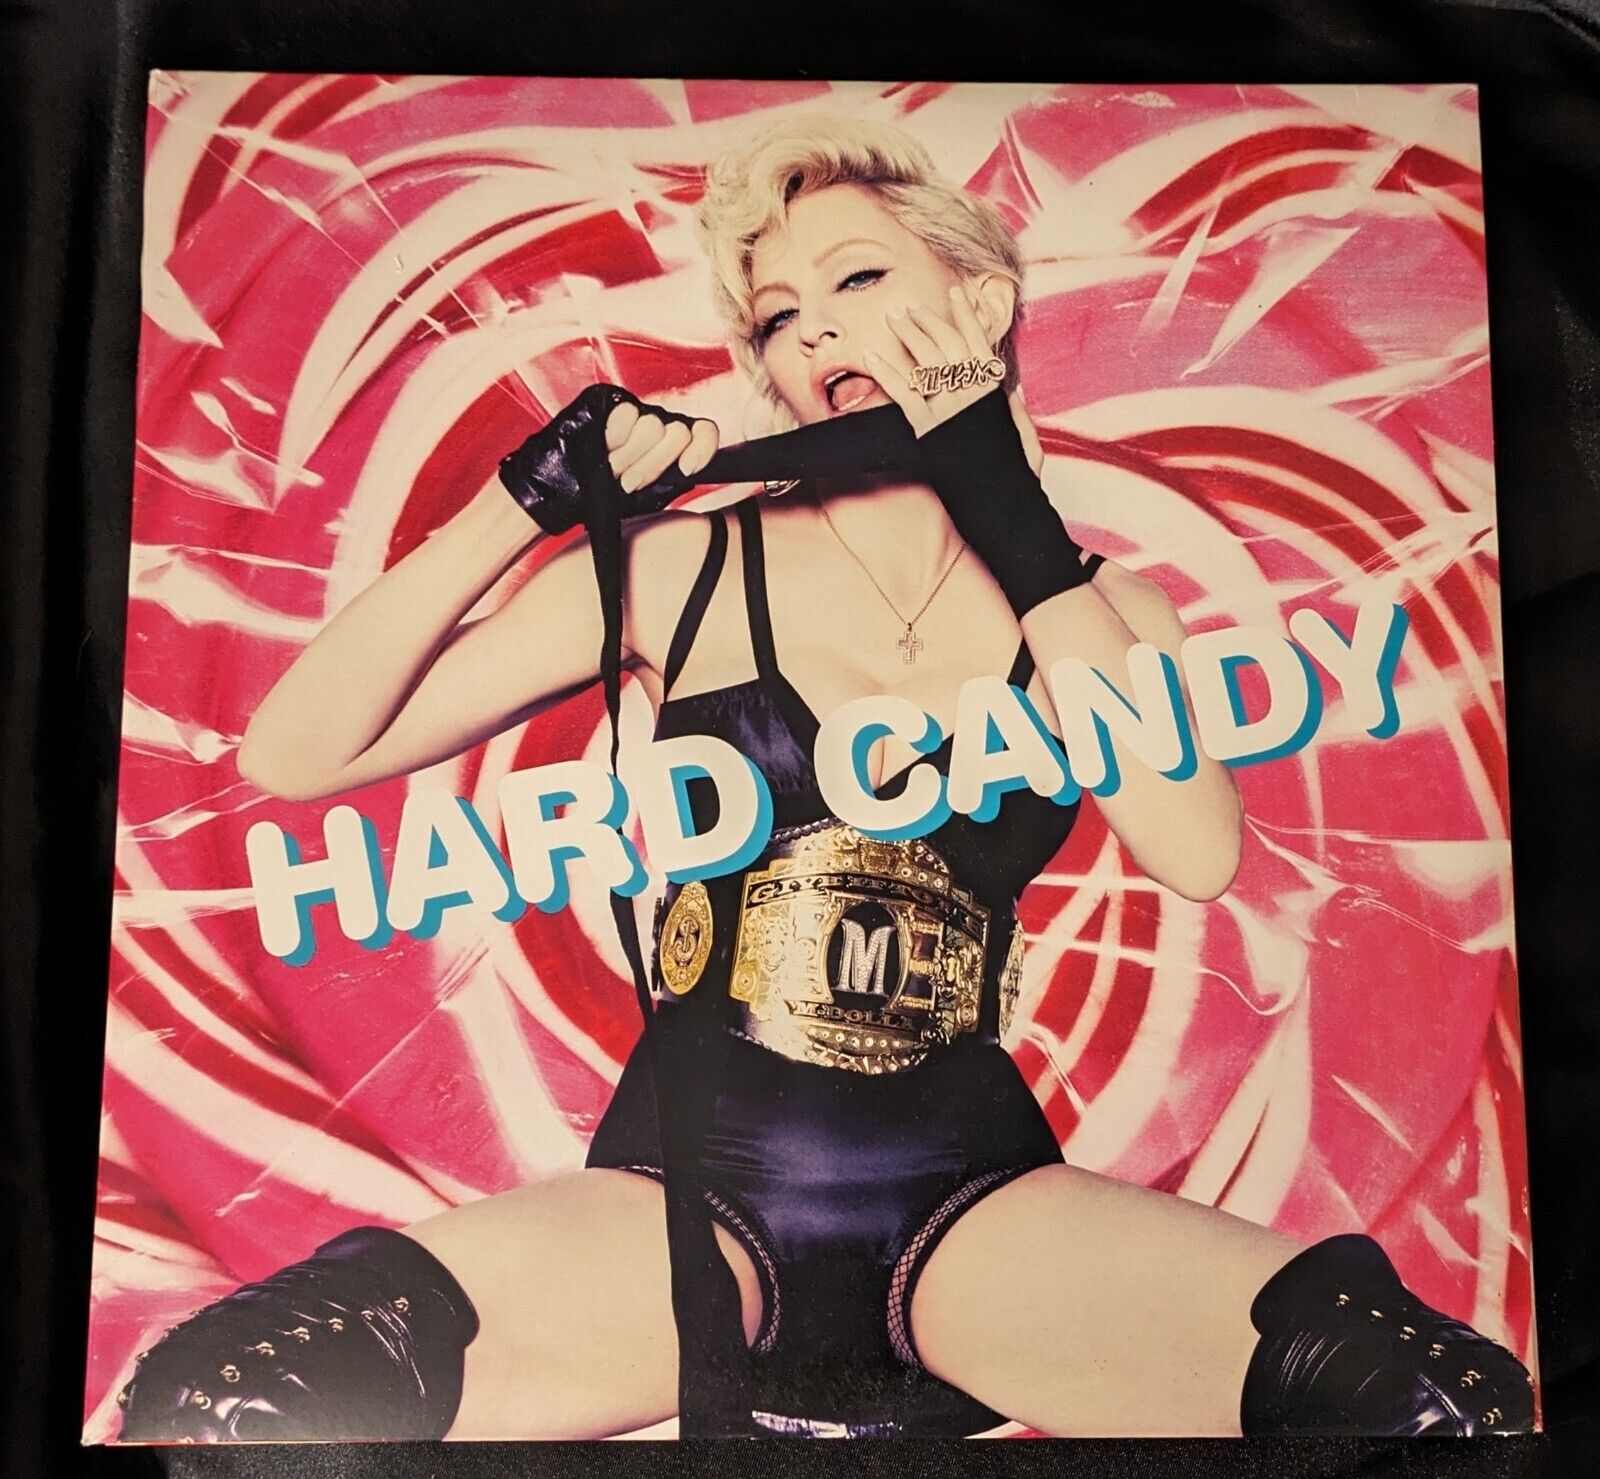 MADONNA blue pink splatter Vinyl 3LP Hard Candy deluxe limited edition RARE